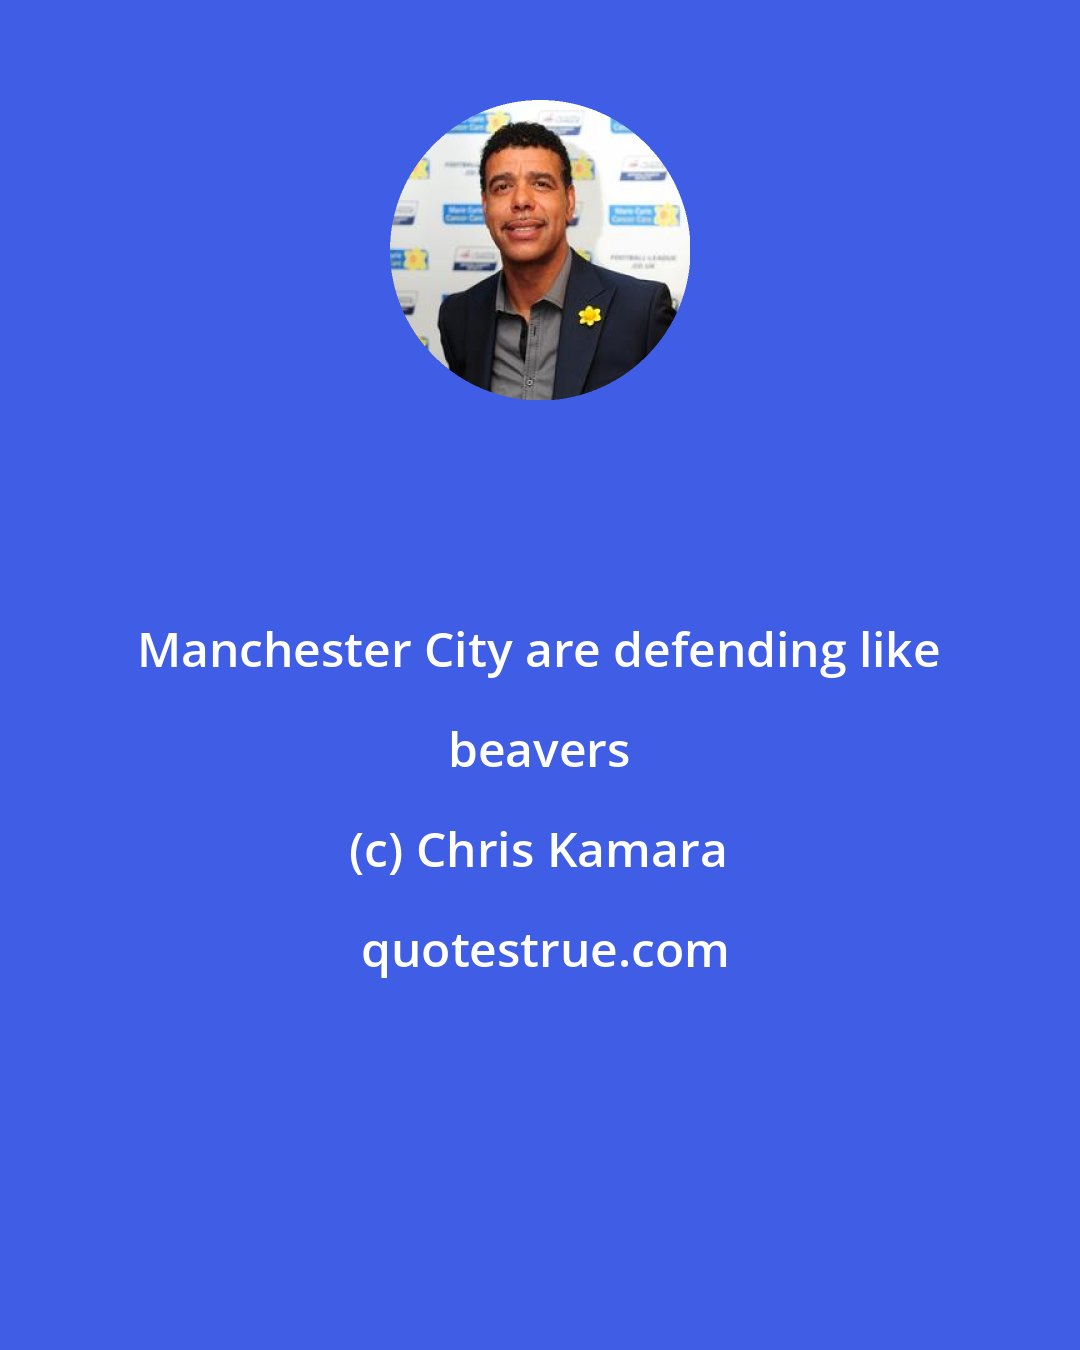 Chris Kamara: Manchester City are defending like beavers